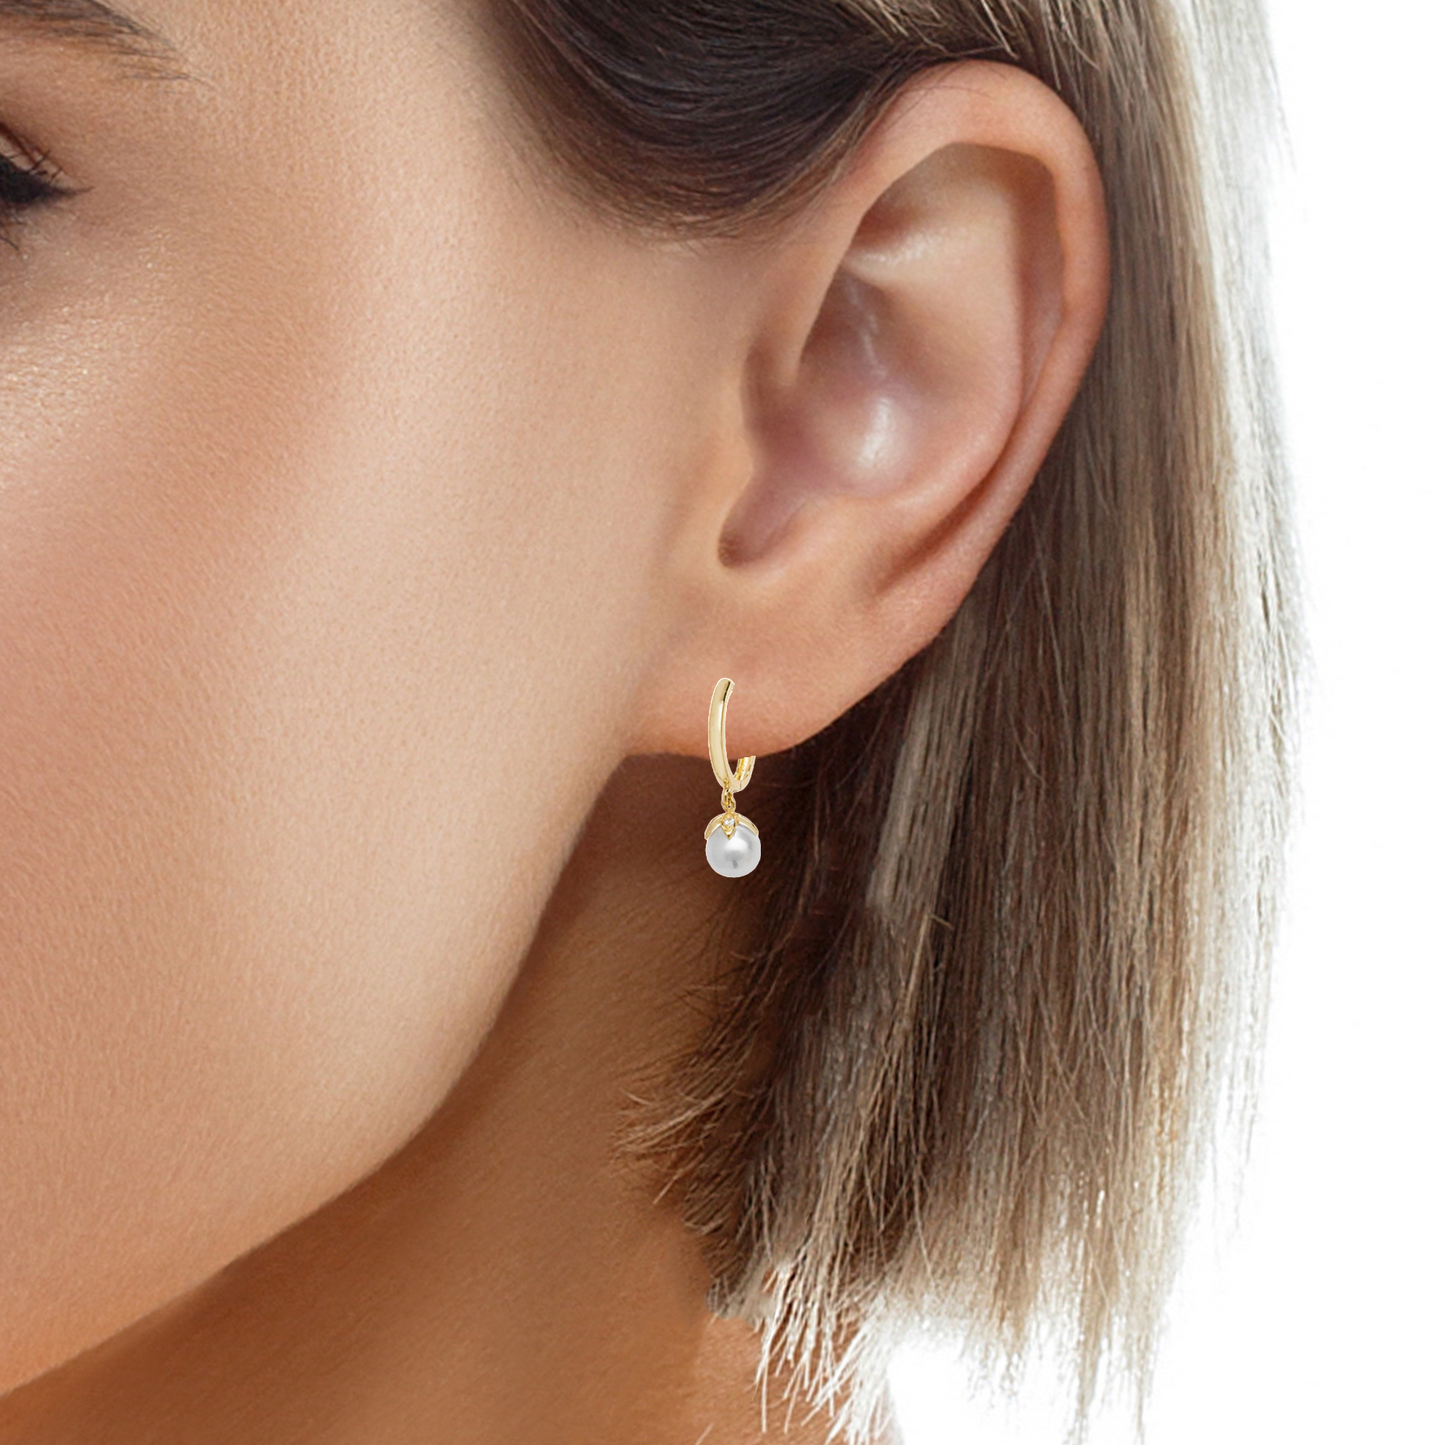 9ct Yellow Gold Pearl Drop Earrings